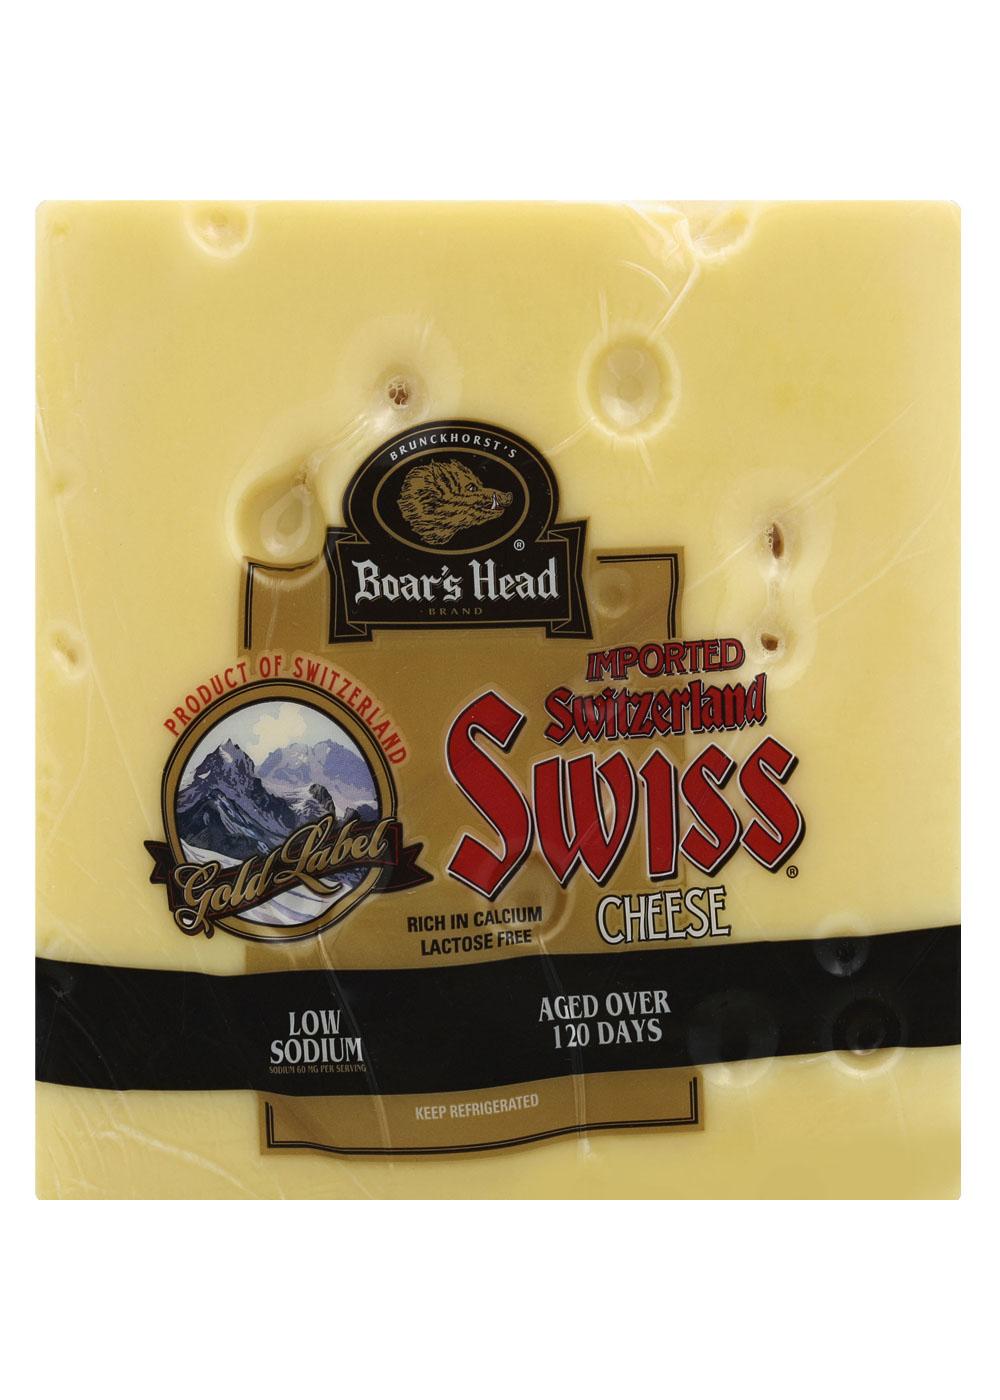 Boar's Head Imported Switzerland Swiss Cheese, Custom Sliced; image 1 of 2